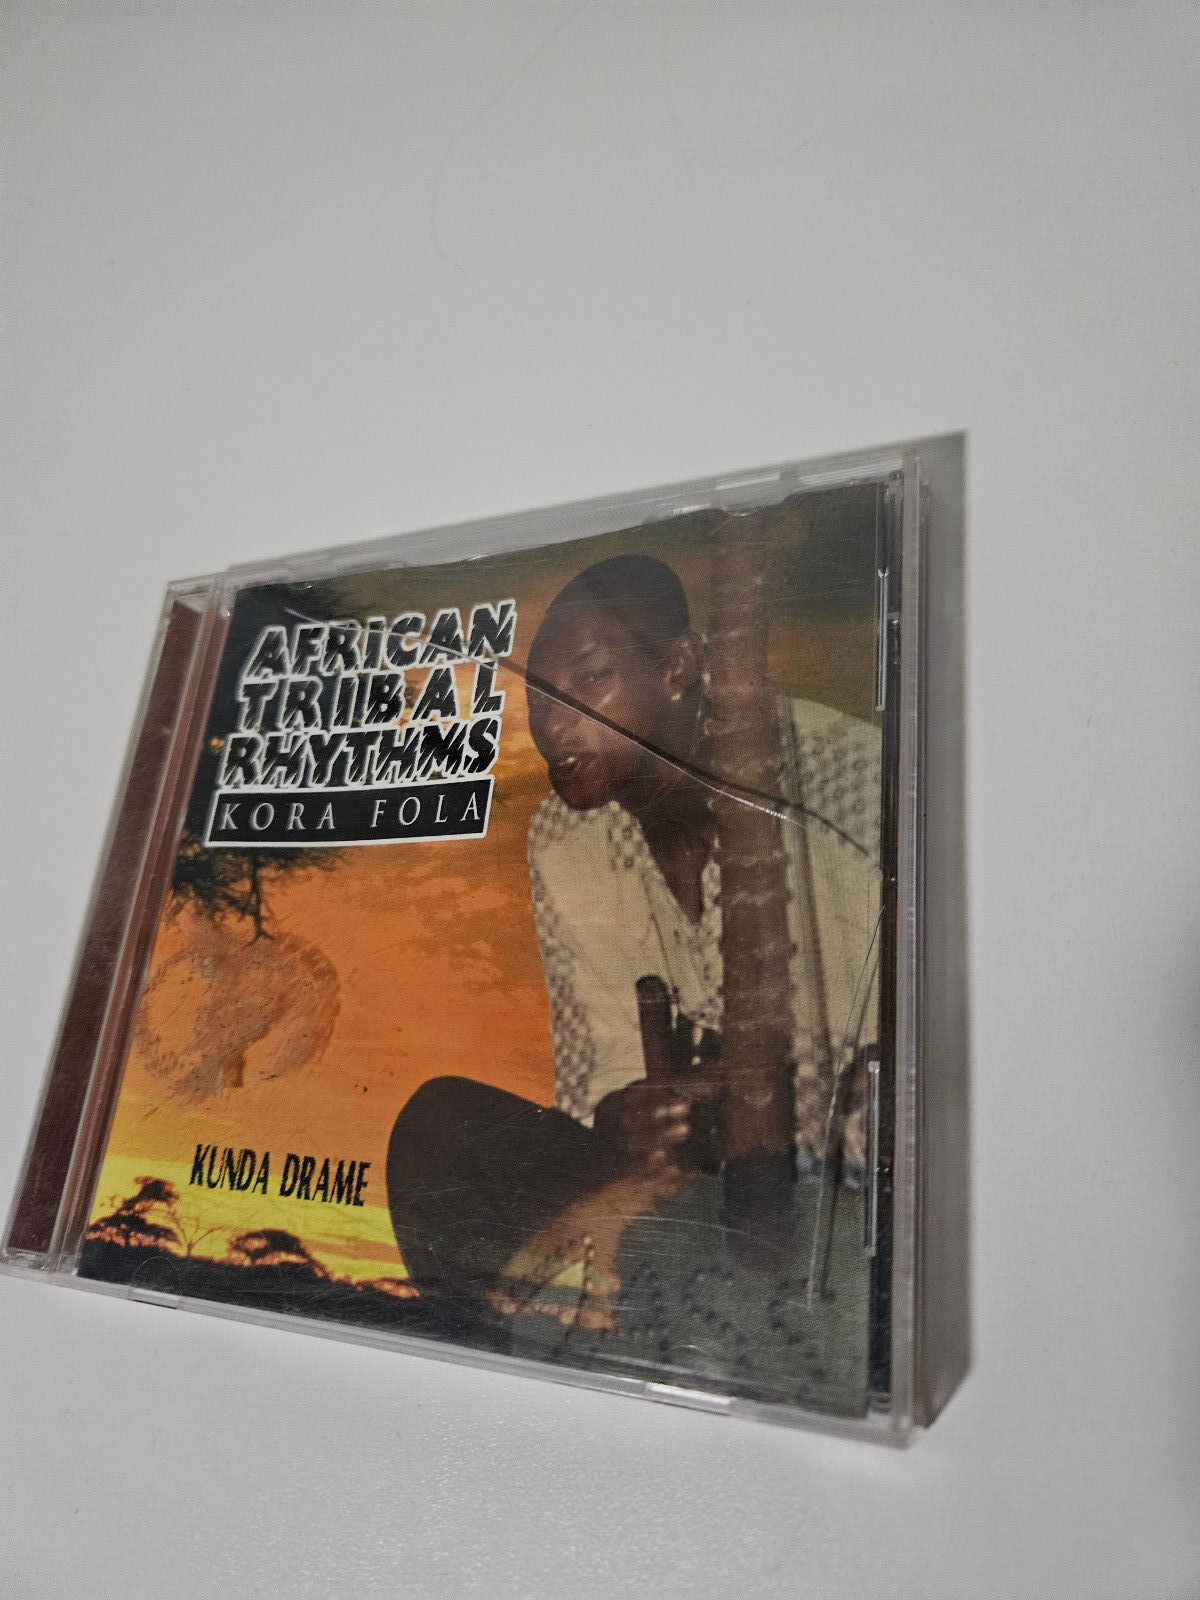 AFRICAN TRIBAL RHYTHMS KORA FOLA CD